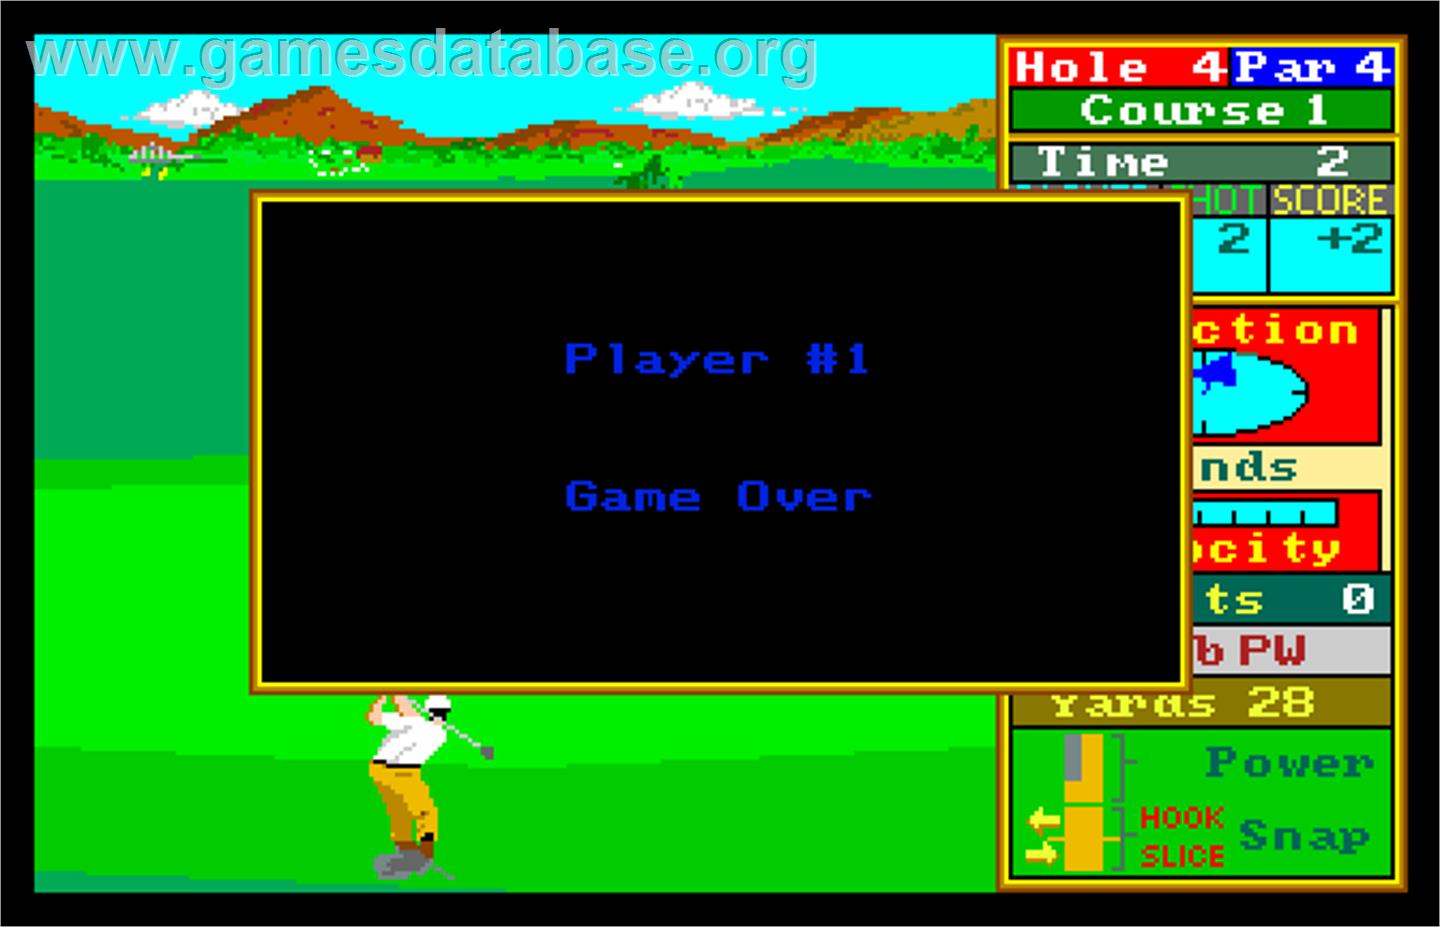 Leader Board - Arcade - Artwork - Game Over Screen